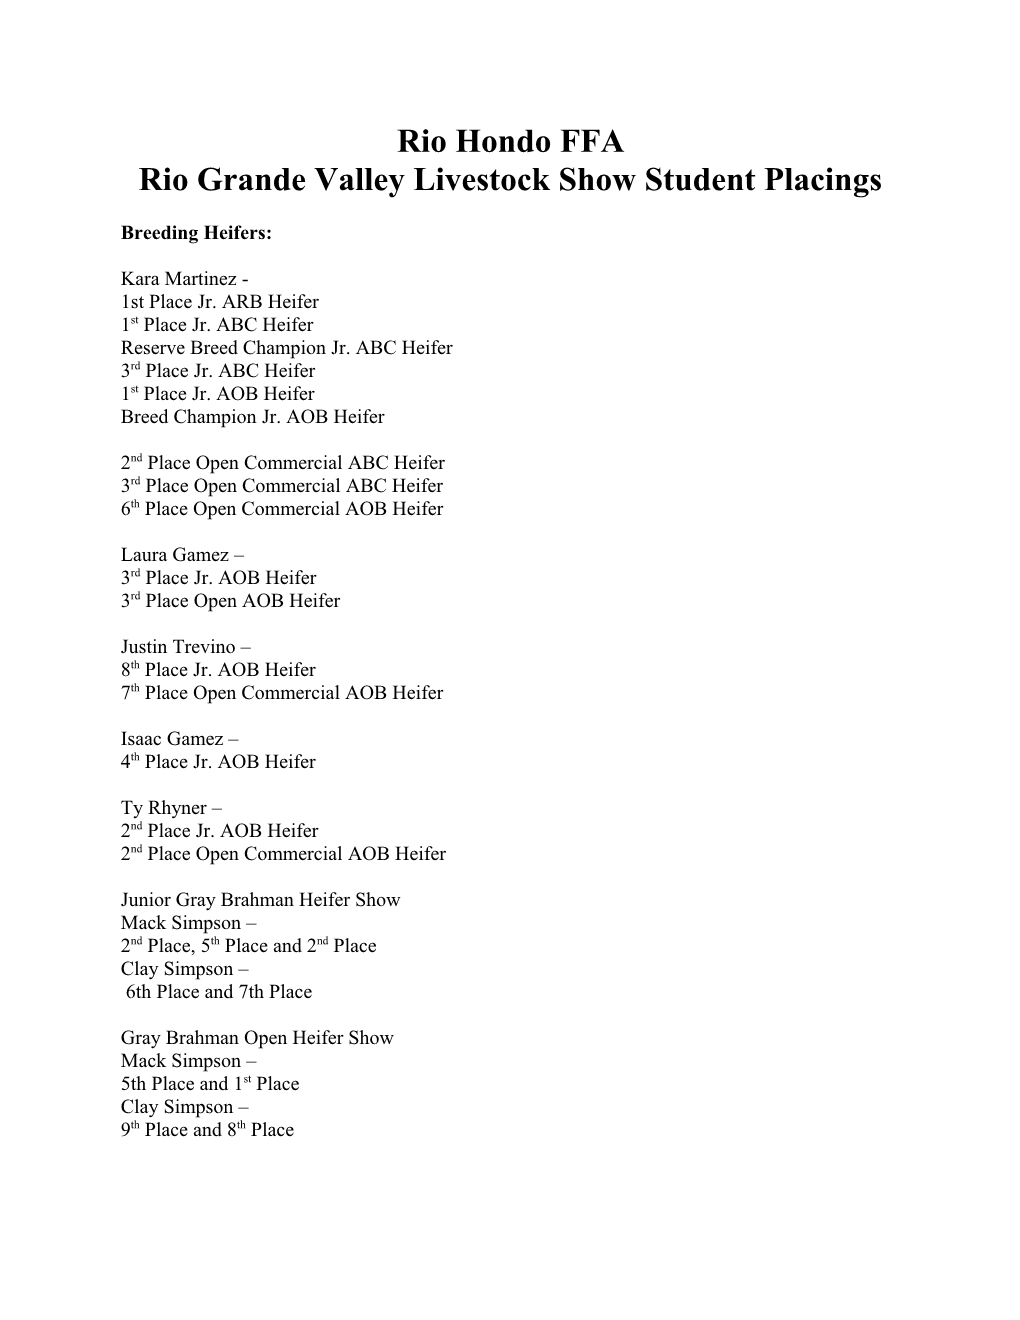 Rio Grande Valley Livestock Show Student Placings